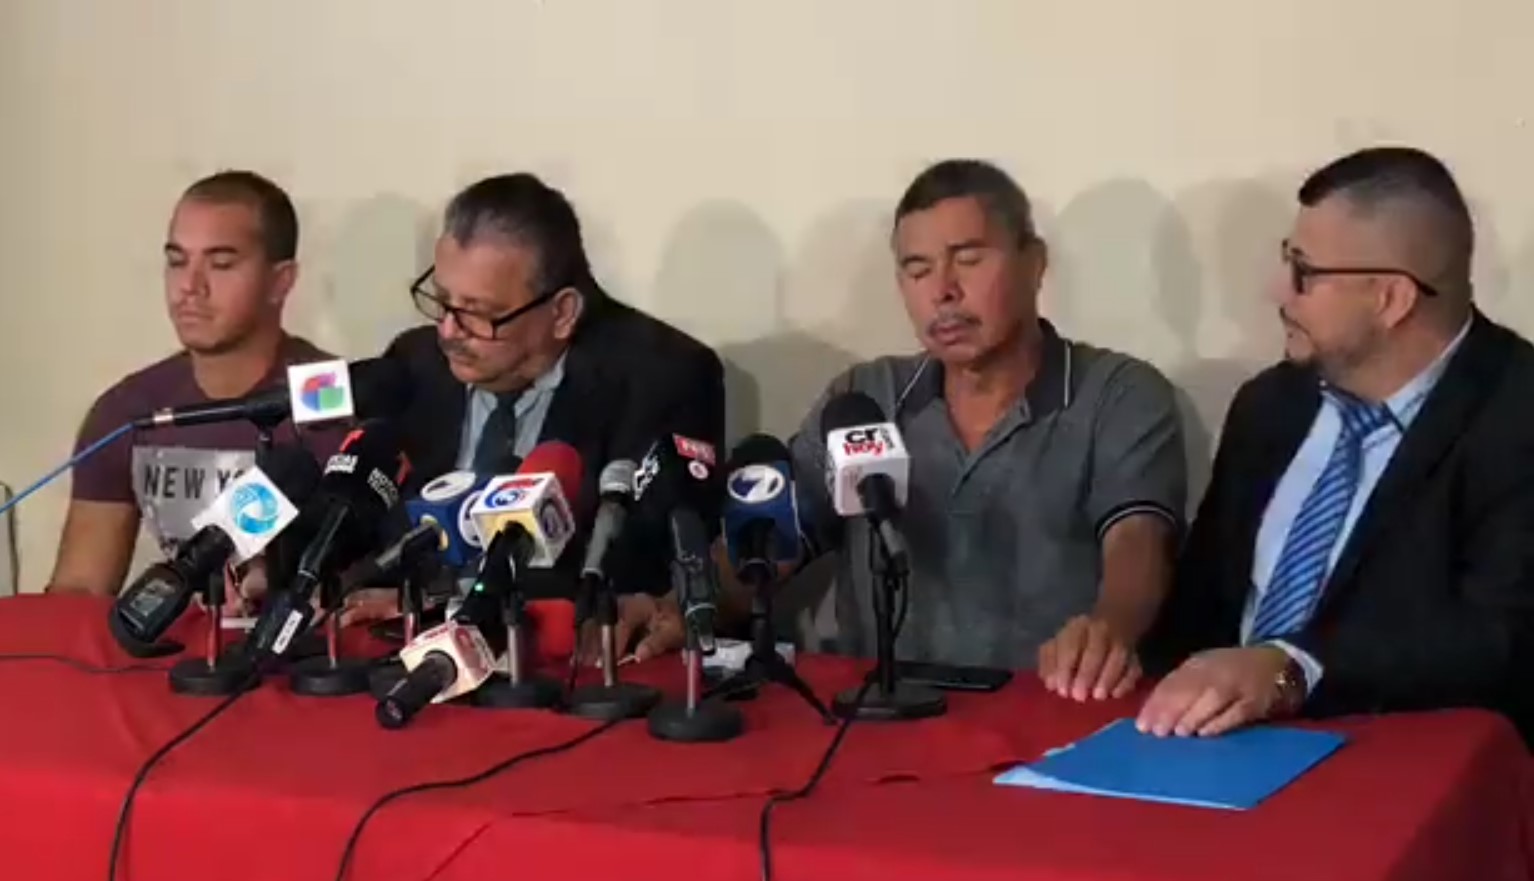 Padre de la venezolana asesinada en Costa Rica: “Carlita, te fuiste tristemente célebre” (Video)